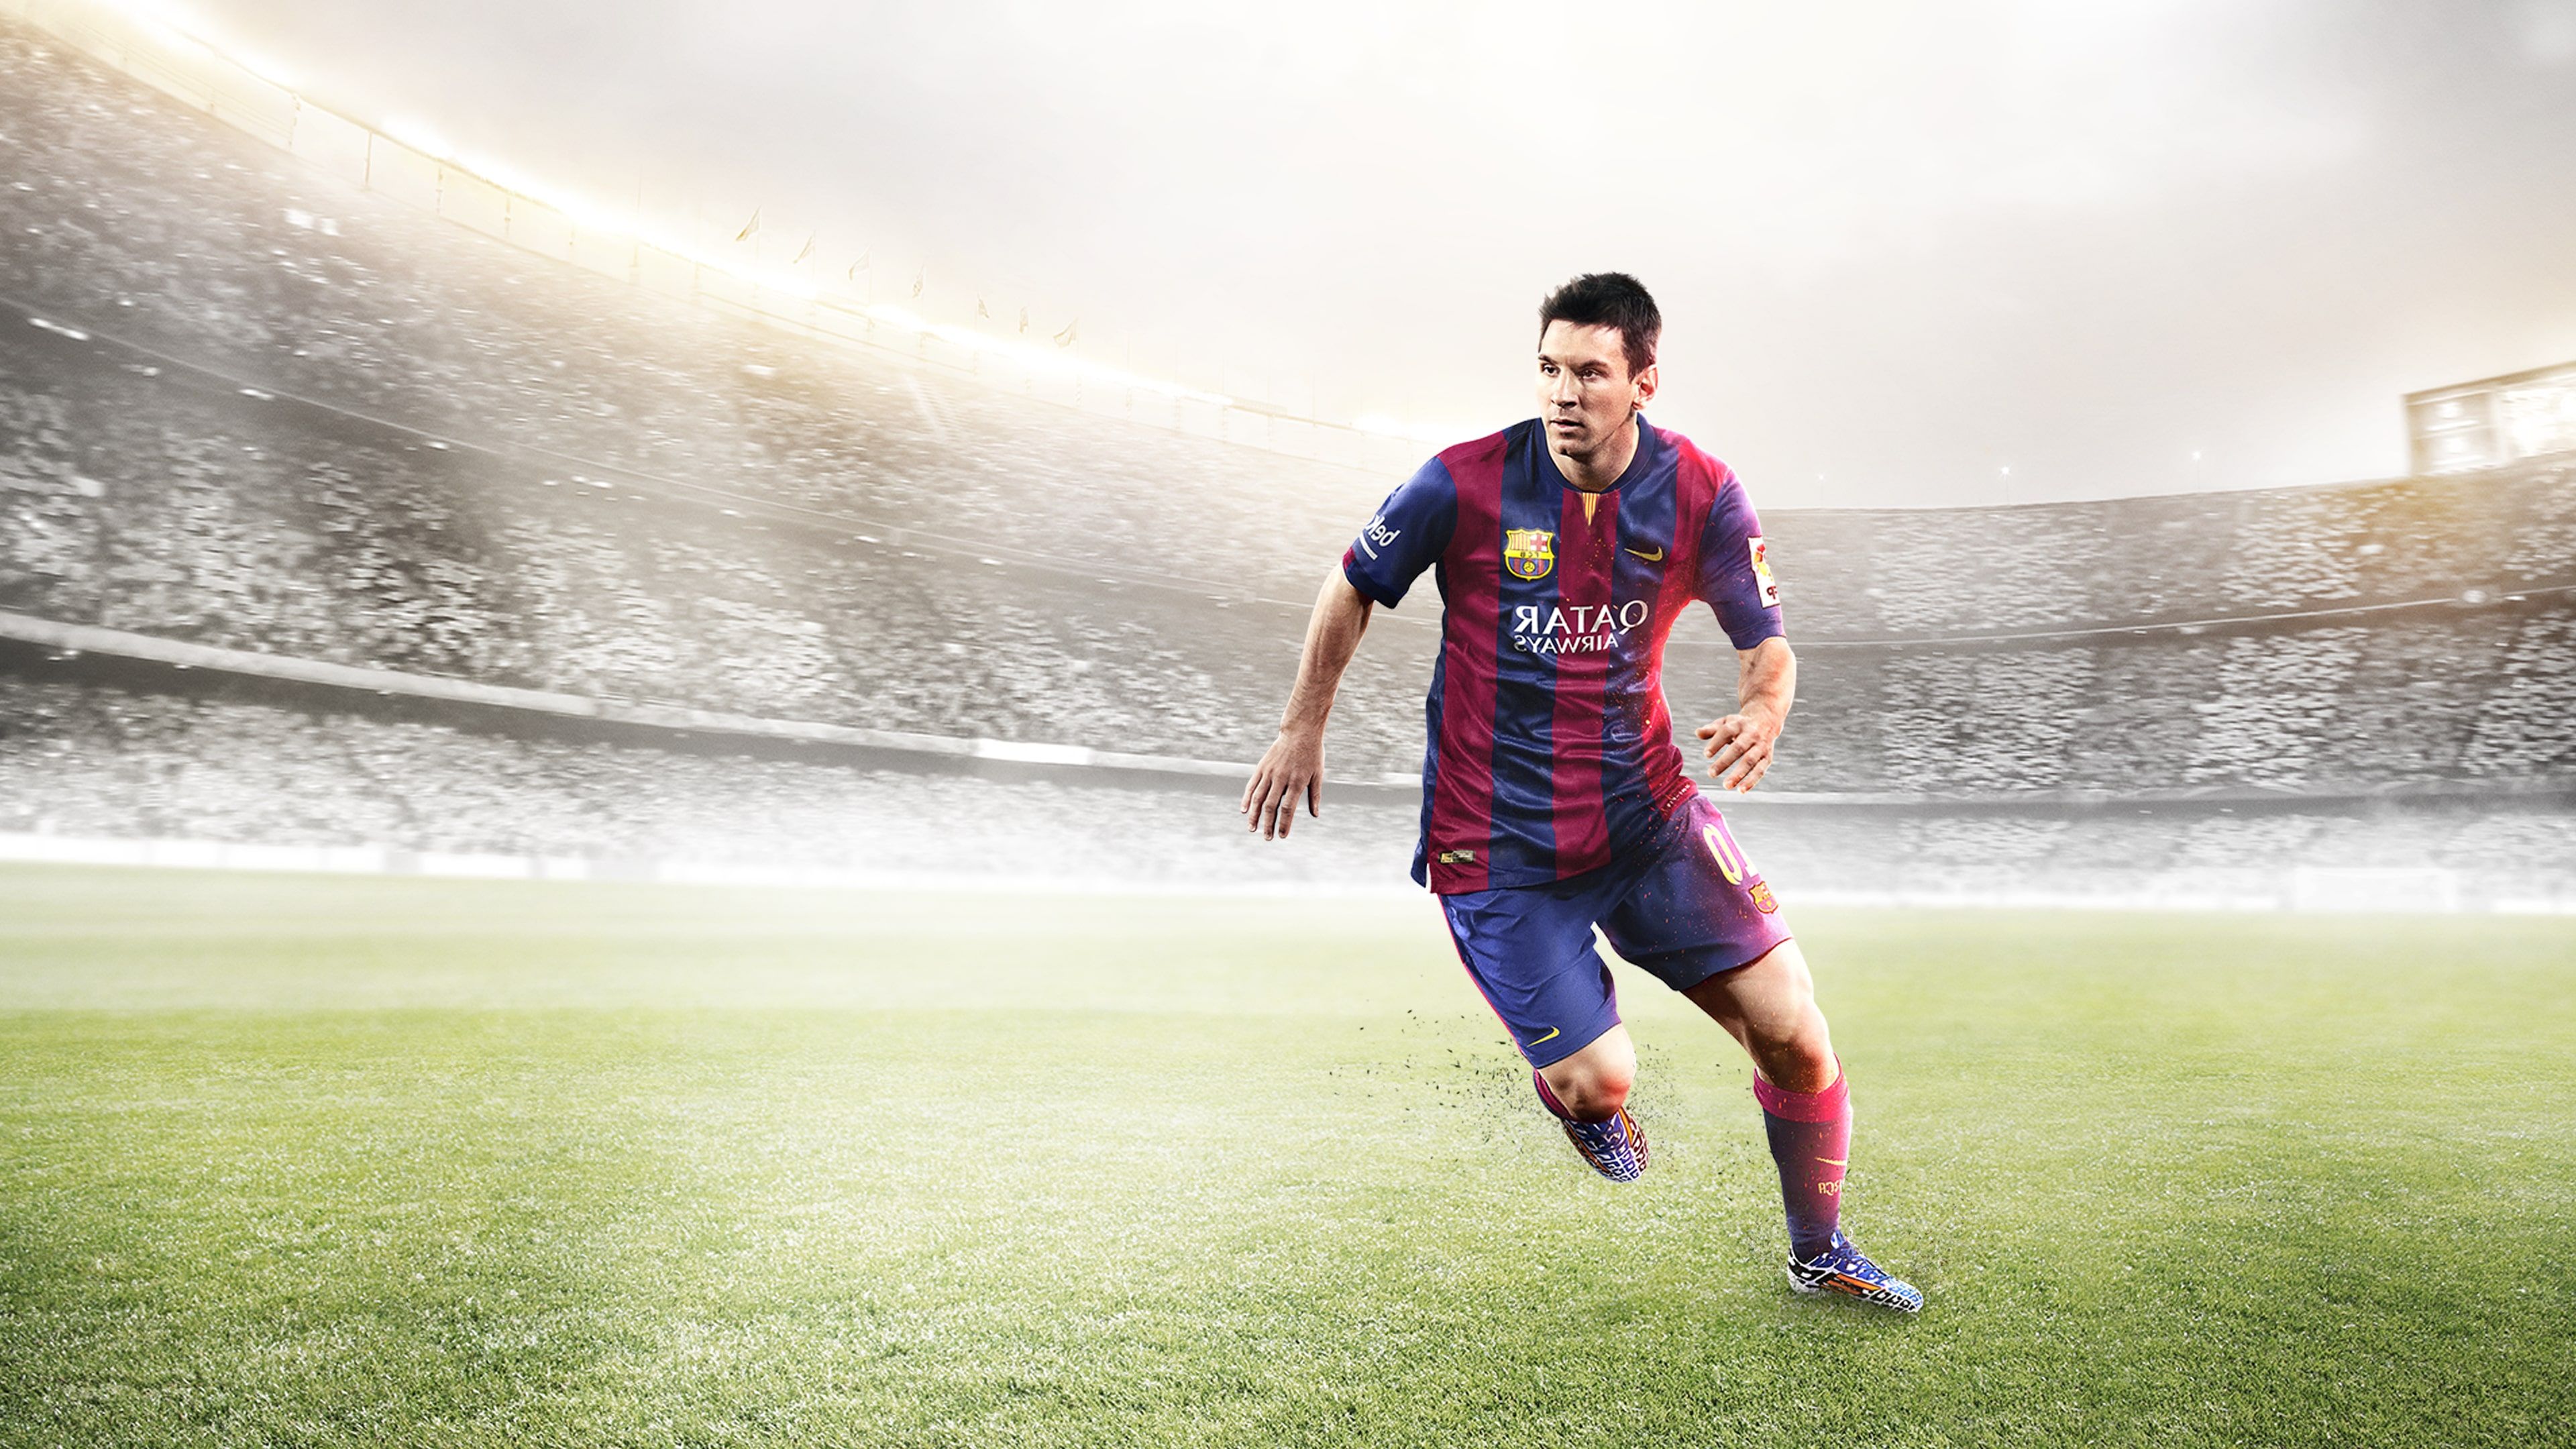 FIFA 15 cover image